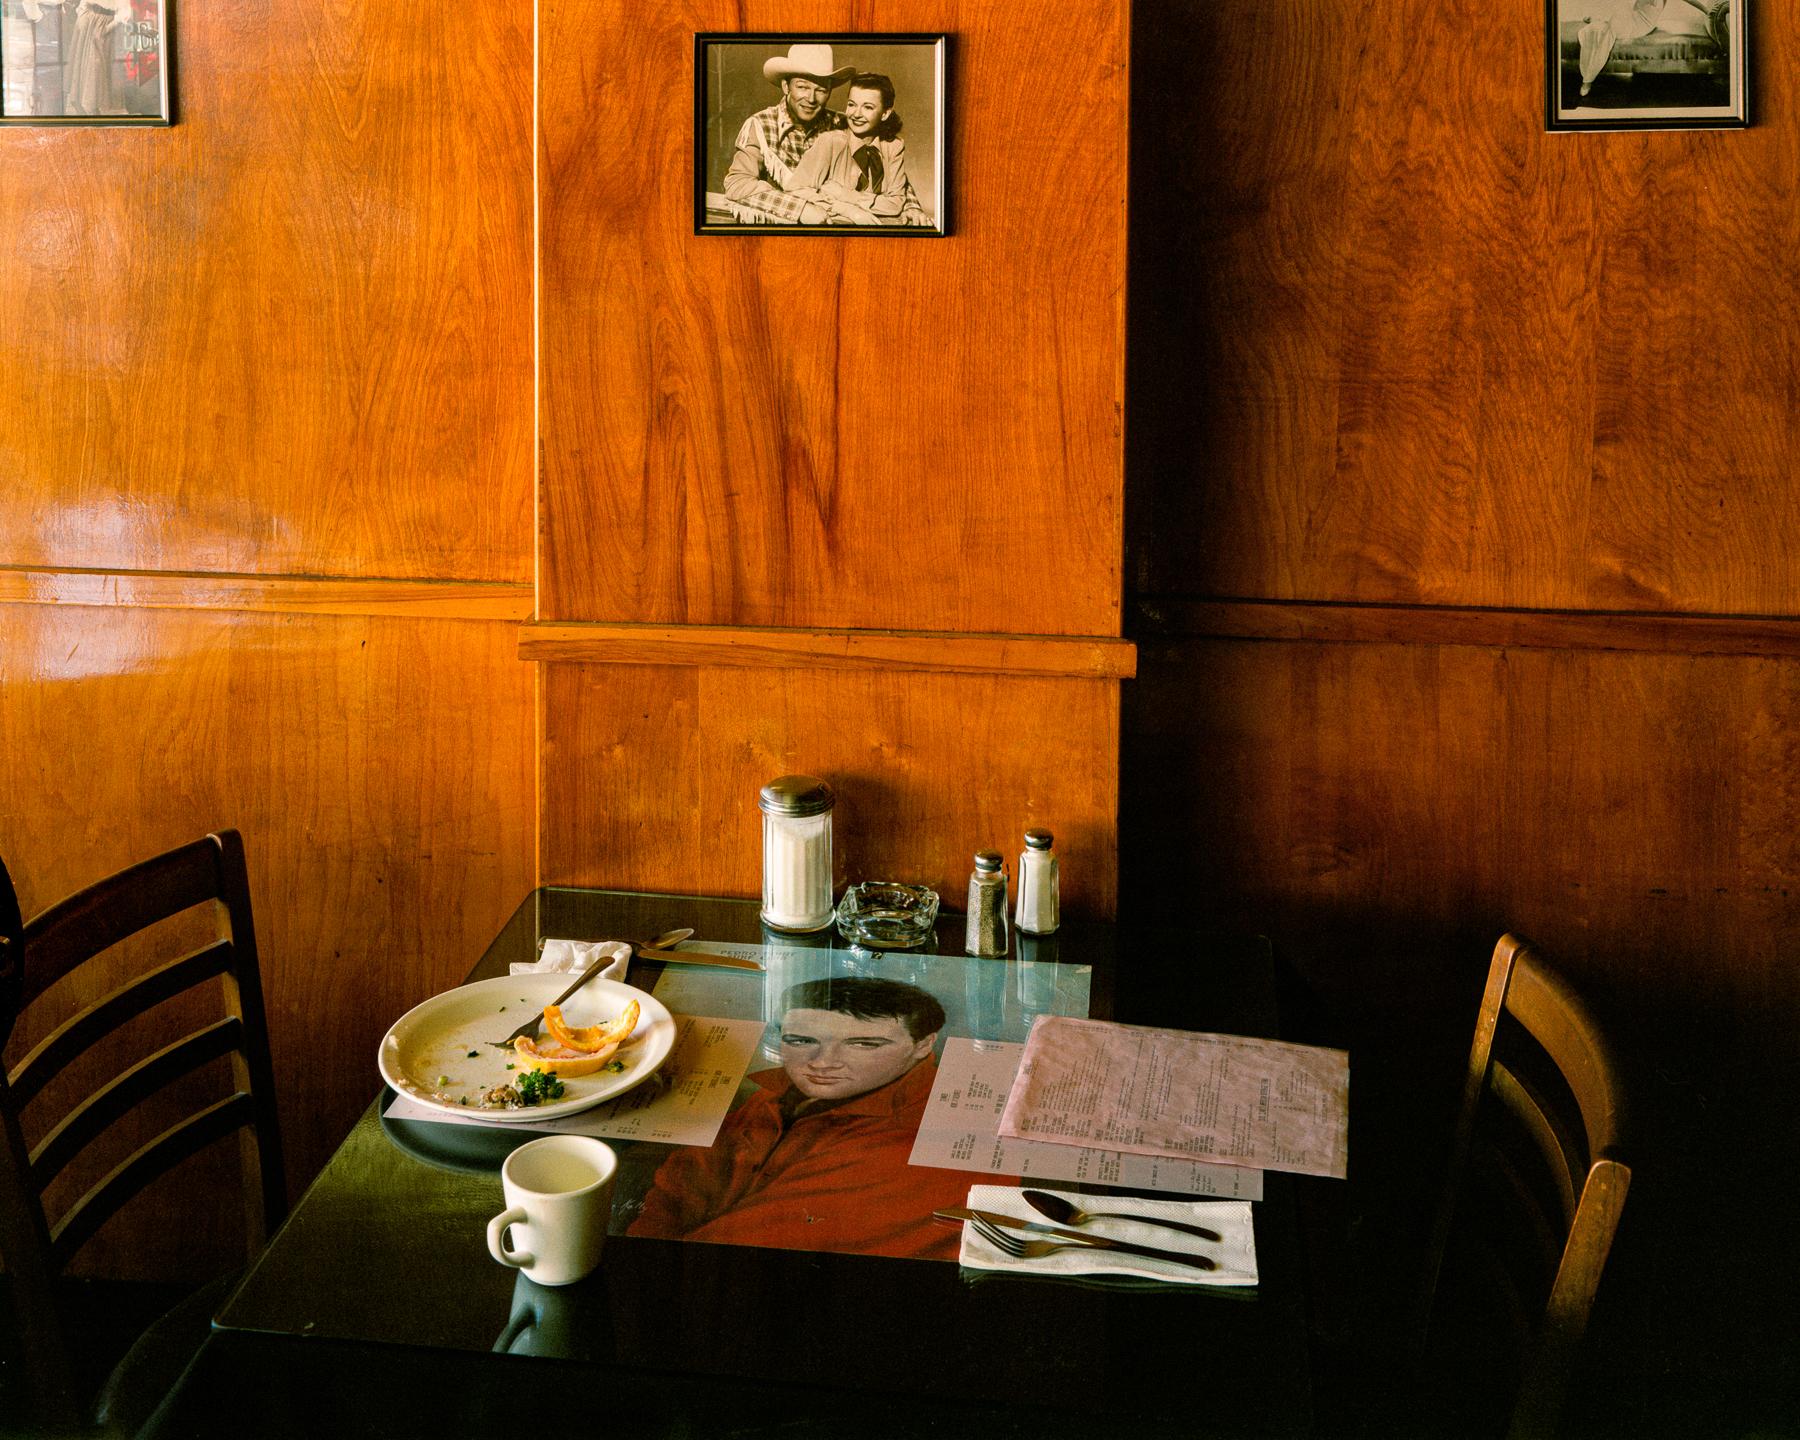 Chambers of Commerce - Breakfast With Elvis, Berkeley, 1983